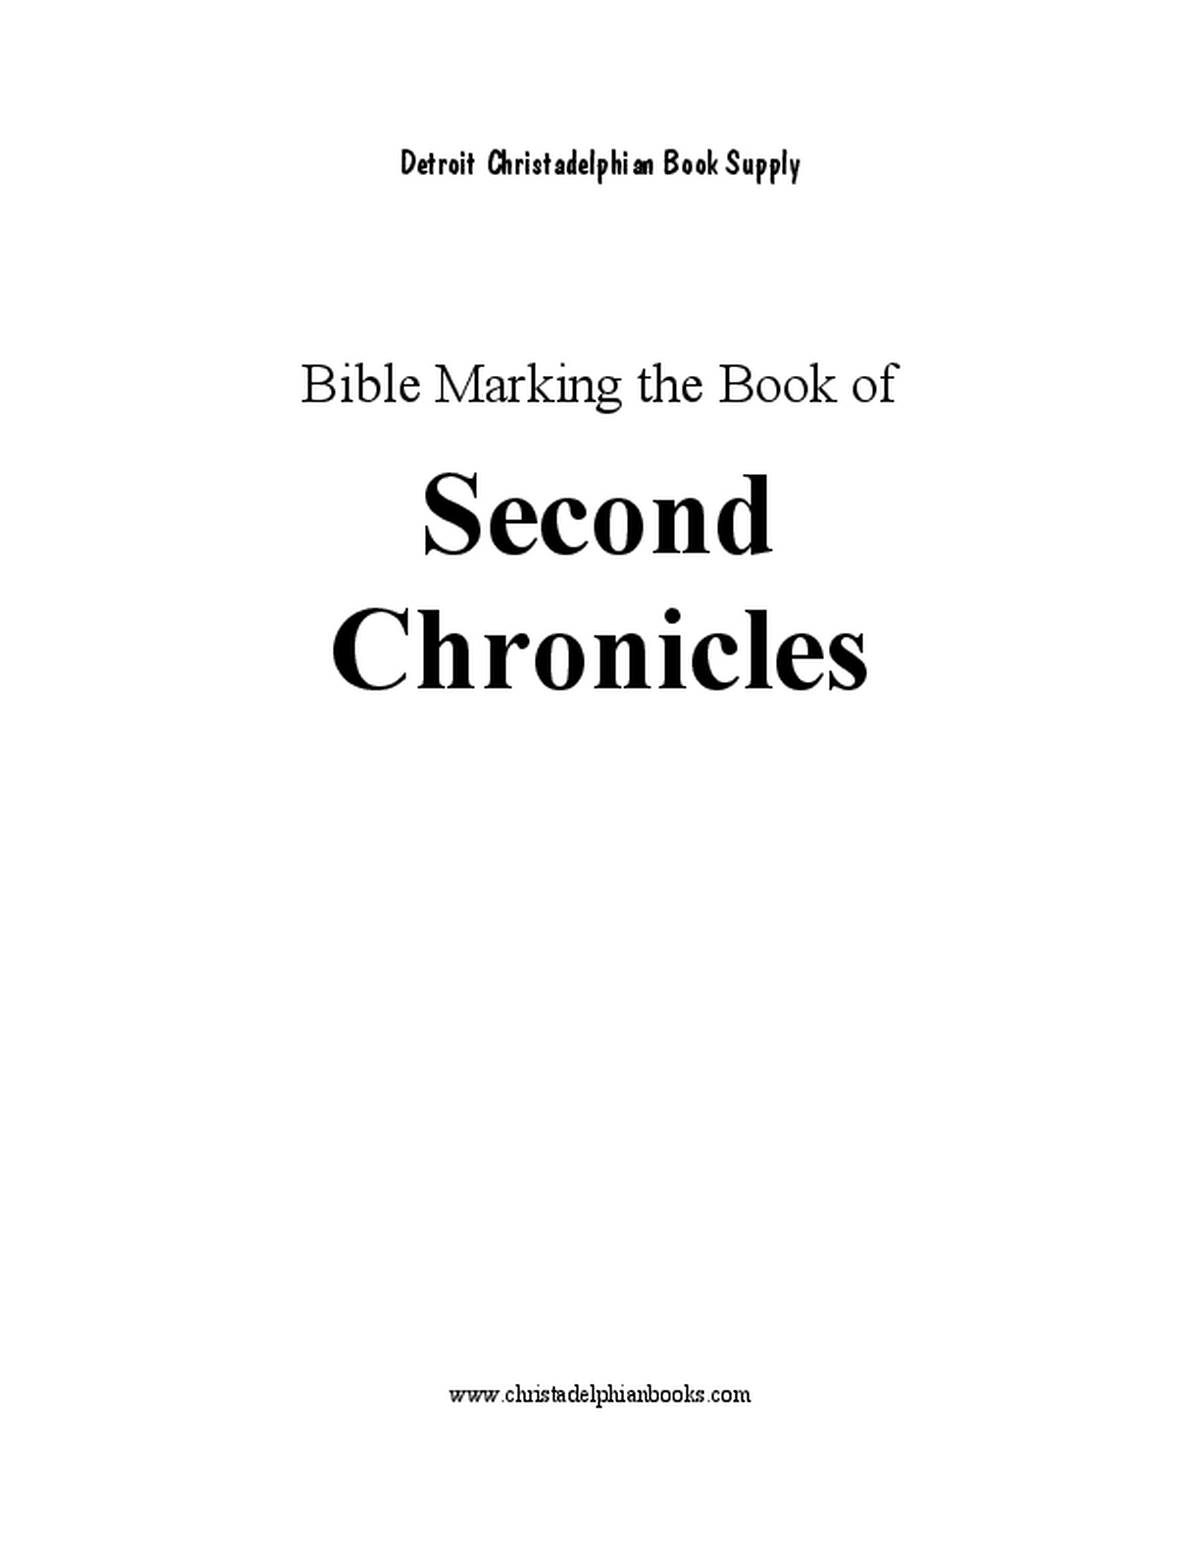 Bible Marking 2 Chronicles - pdf File